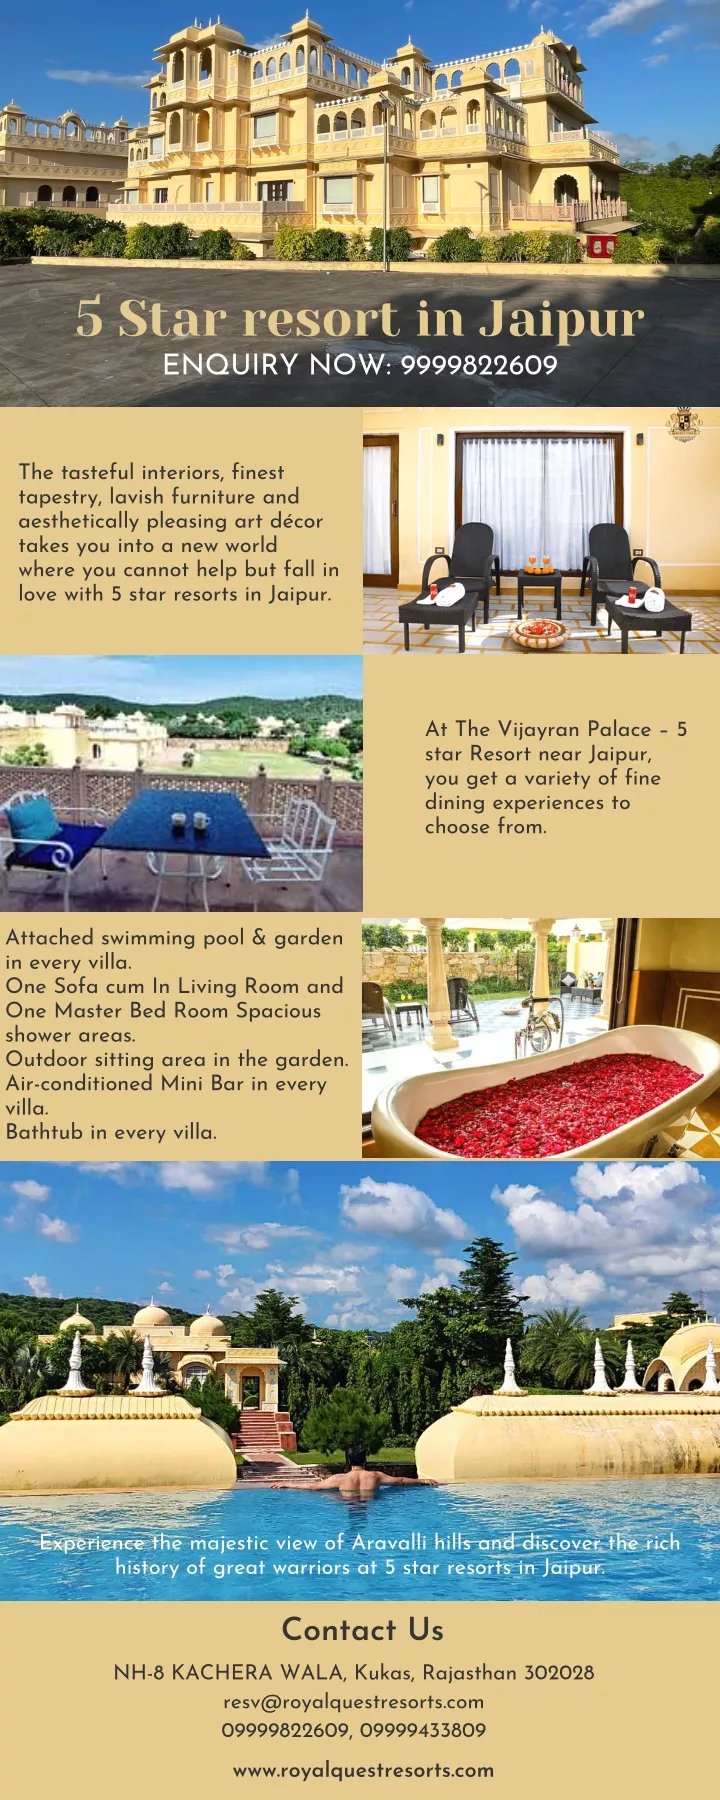 5 star resort in jaipur enquiry now 9999822609